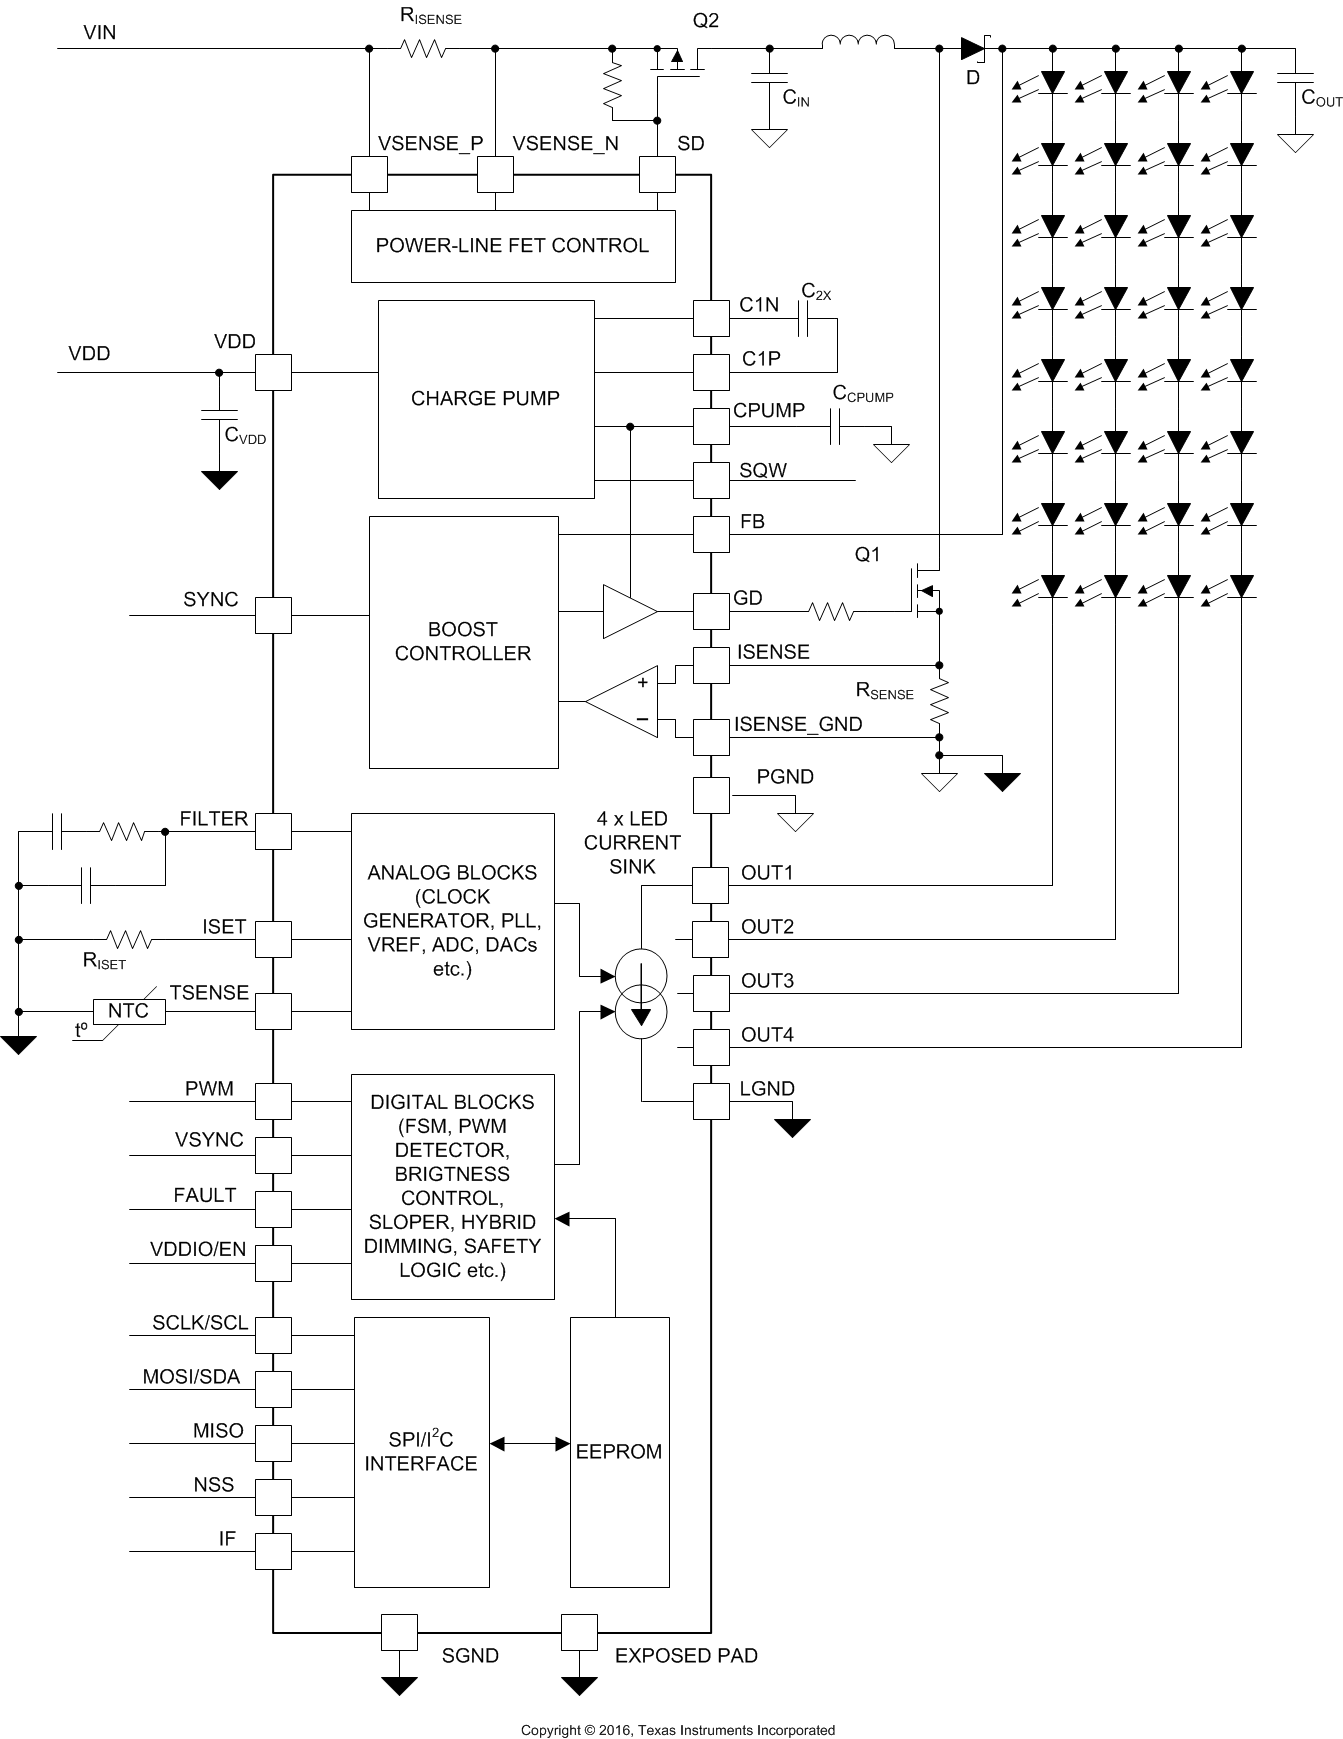 LP8860-Q1 funct_block_diagram_SNVSA21.gif